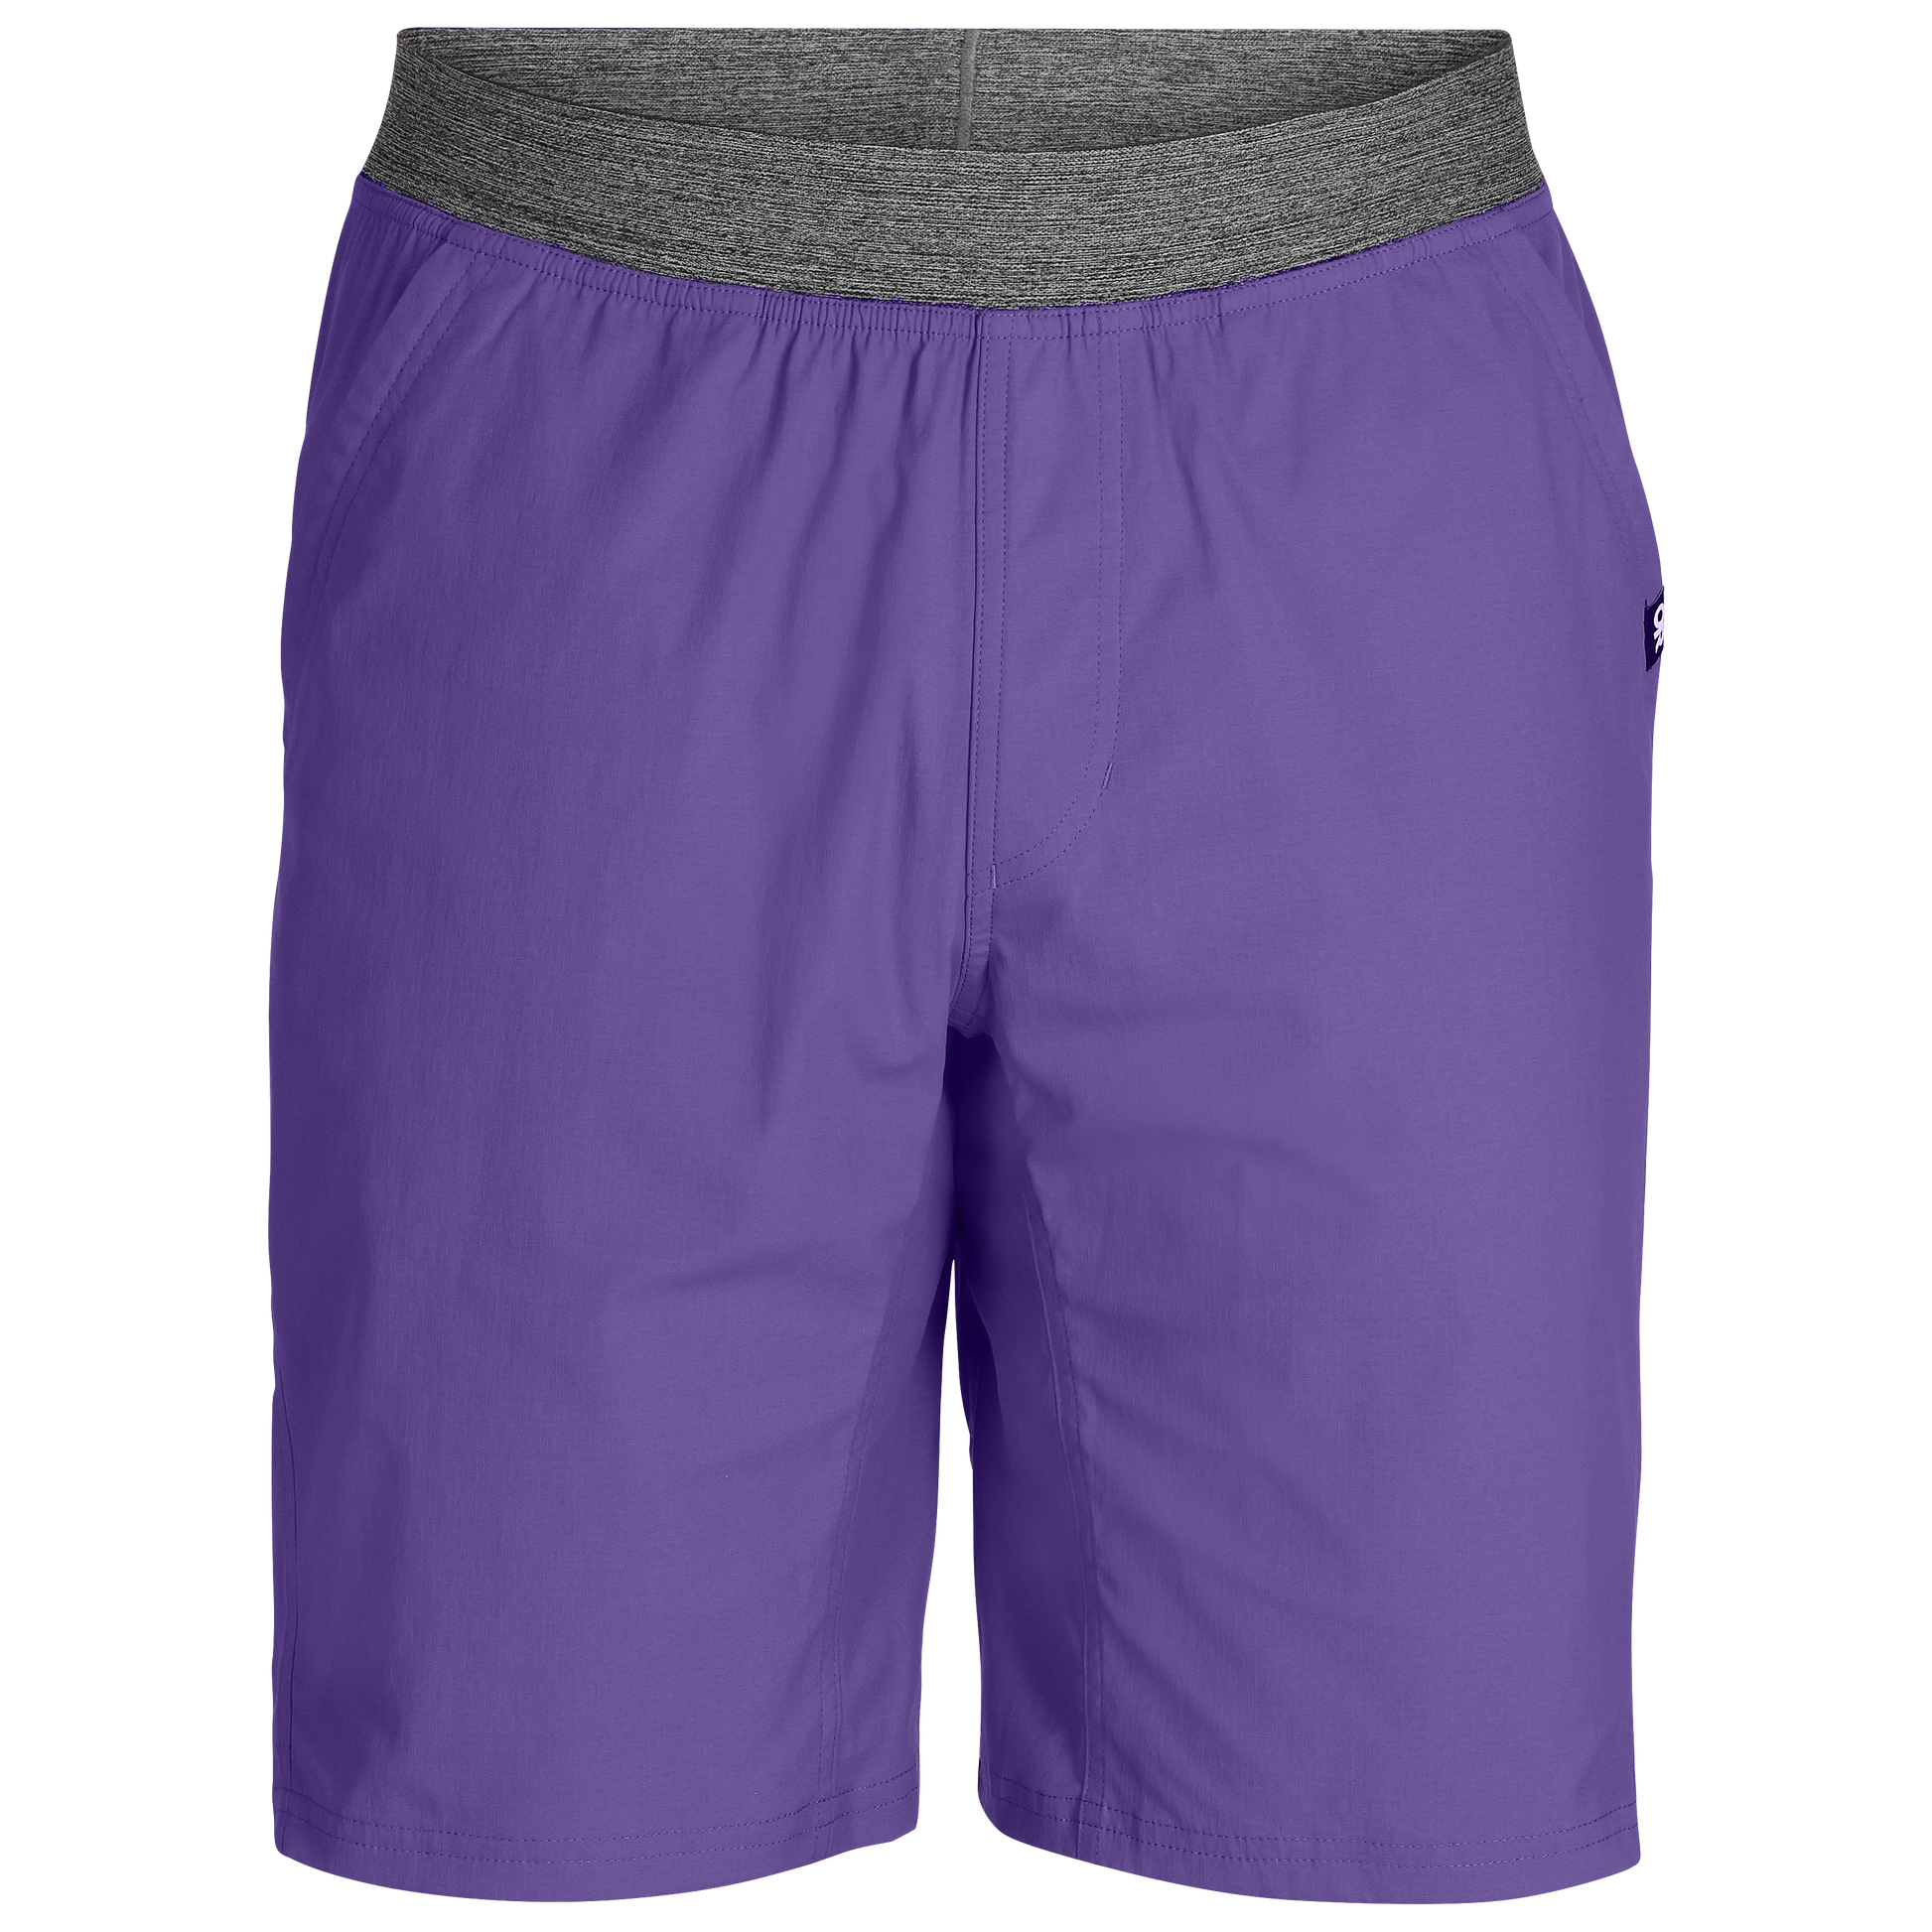 Purple Mesh Men's Shorts at  Men’s Clothing store: Athletic Shorts